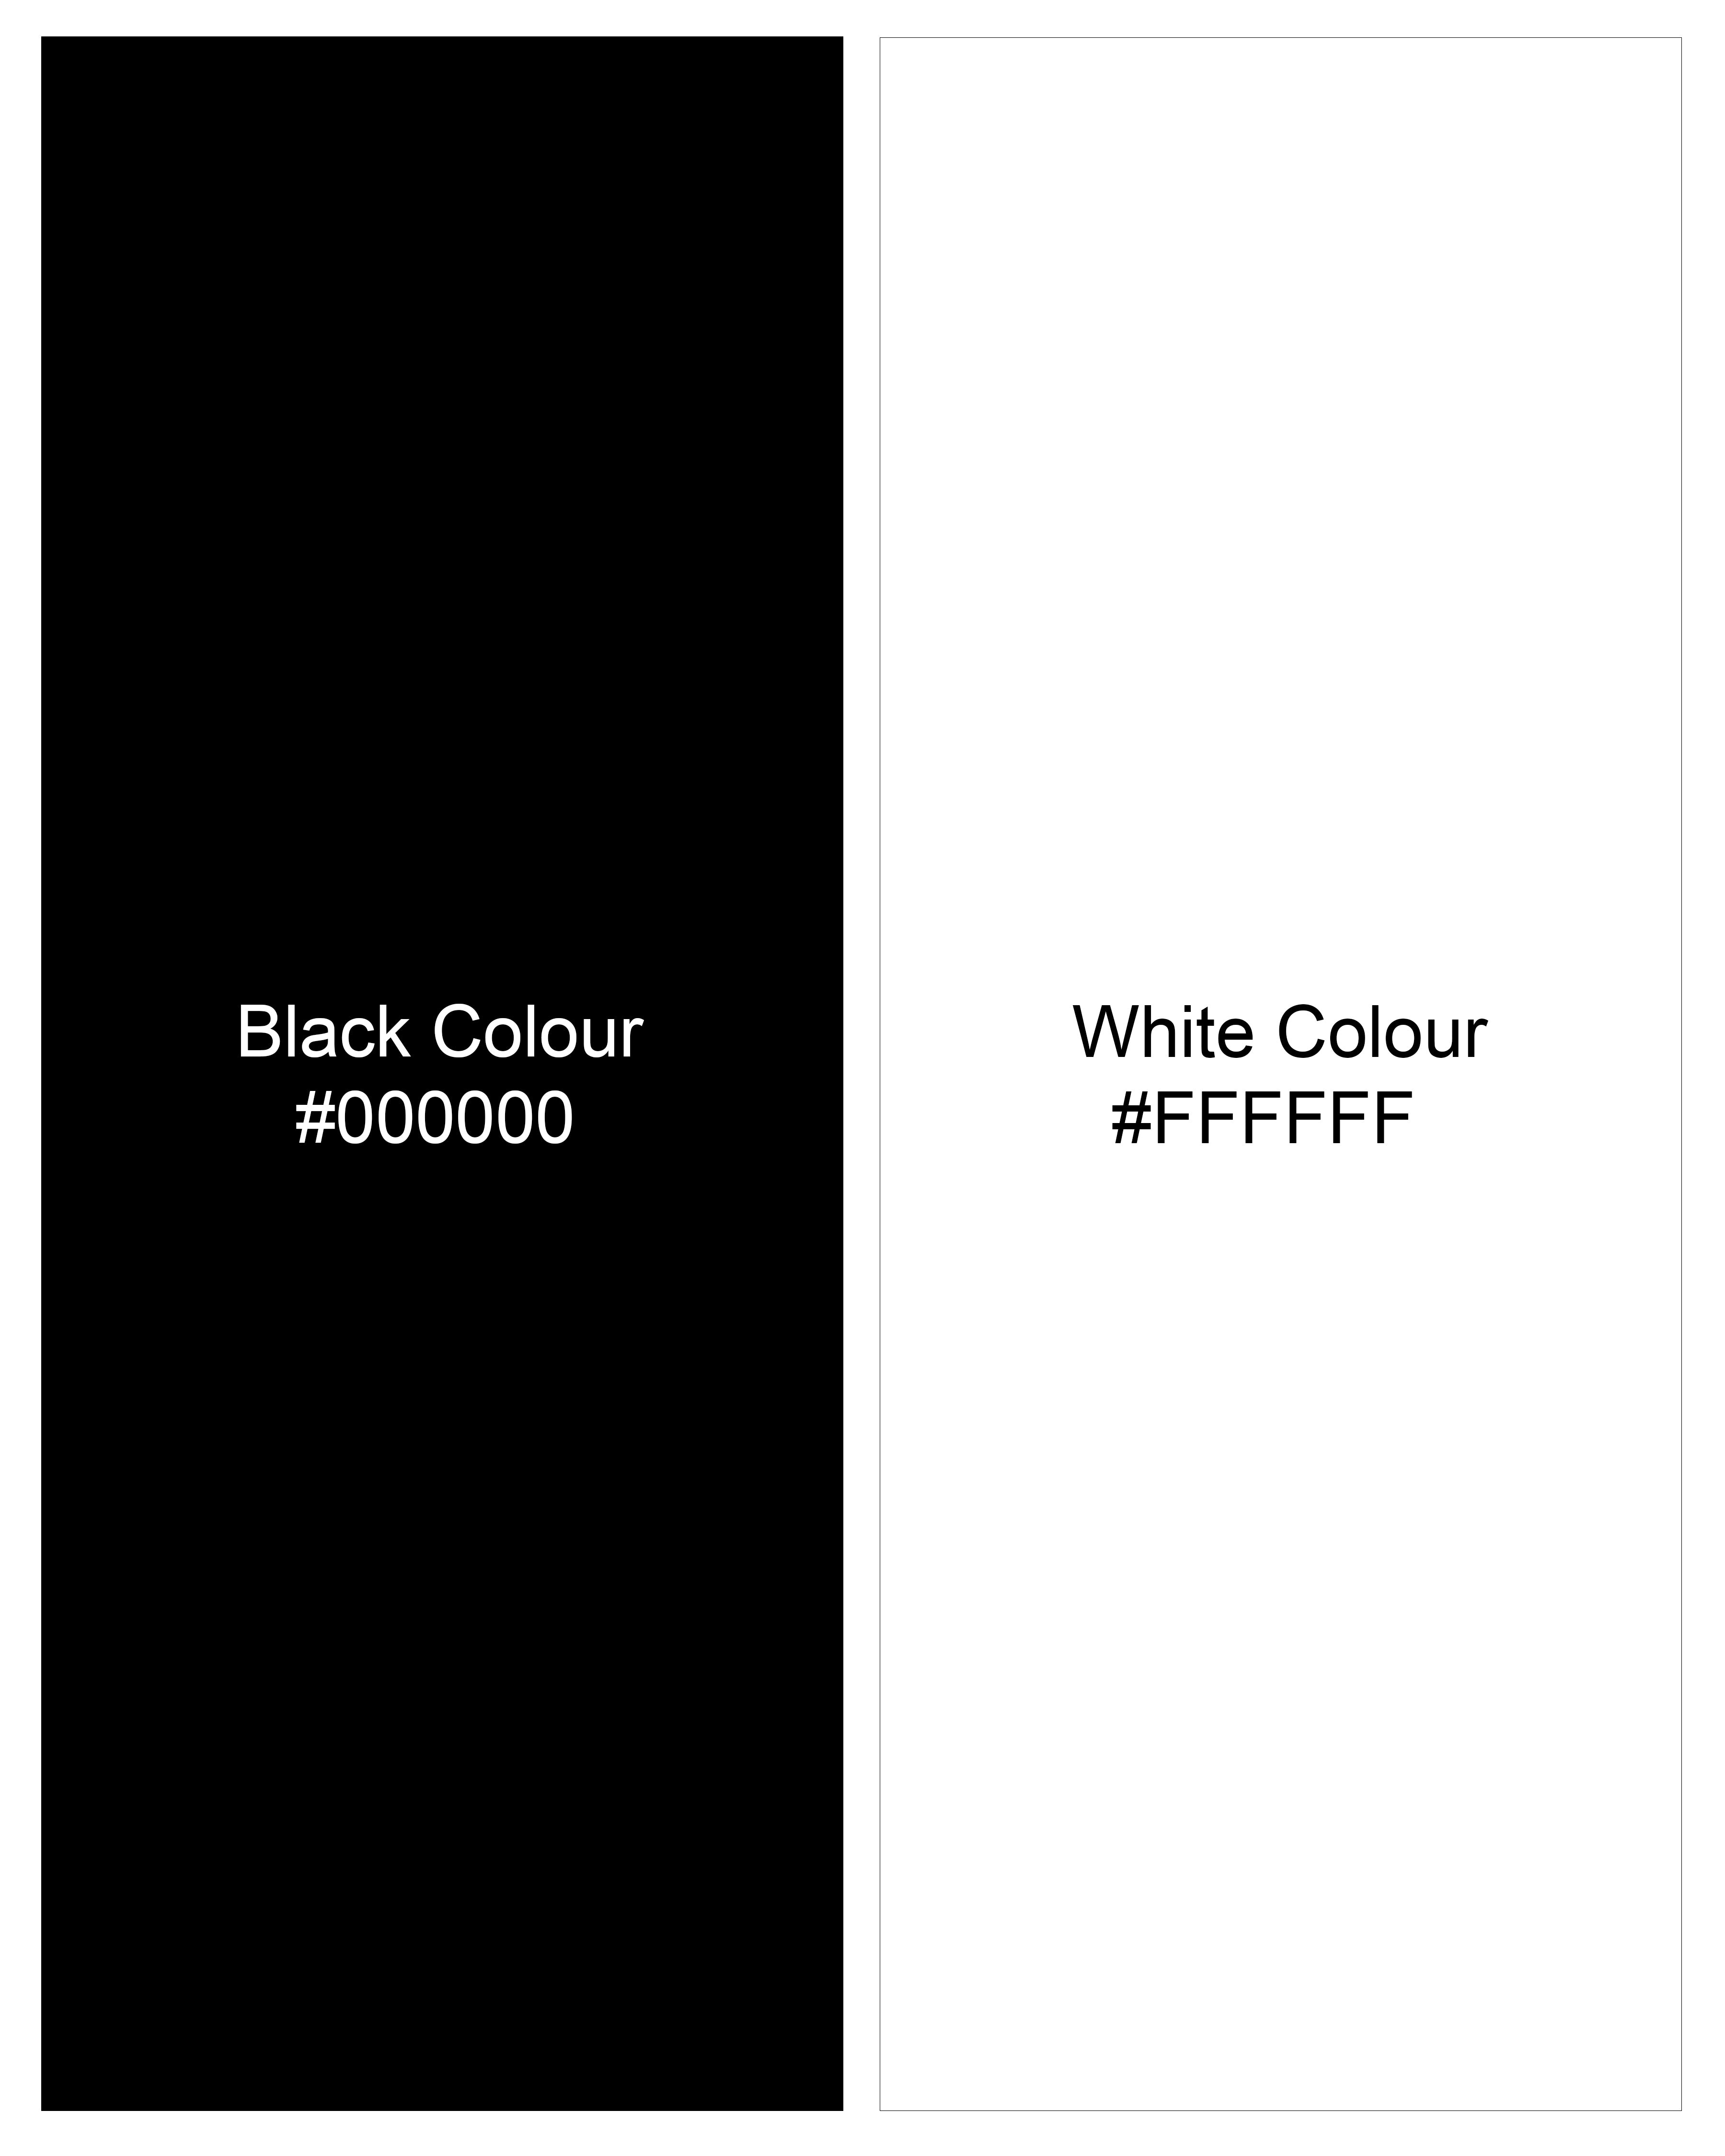 Jade Black with White Embroidered Super Soft Premium Cotton Shirt 9823-BLK--38, 9823-BLK--H-38, 9823-BLK--39, 9823-BLK--H-39, 9823-BLK--40, 9823-BLK--H-40, 9823-BLK--42, 9823-BLK--H-42, 9823-BLK--44, 9823-BLK--H-44, 9823-BLK--46, 9823-BLK--H-46, 9823-BLK--48, 9823-BLK--H-48, 9823-BLK--50, 9823-BLK--H-50, 9823-BLK--52, 9823-BLK--H-52